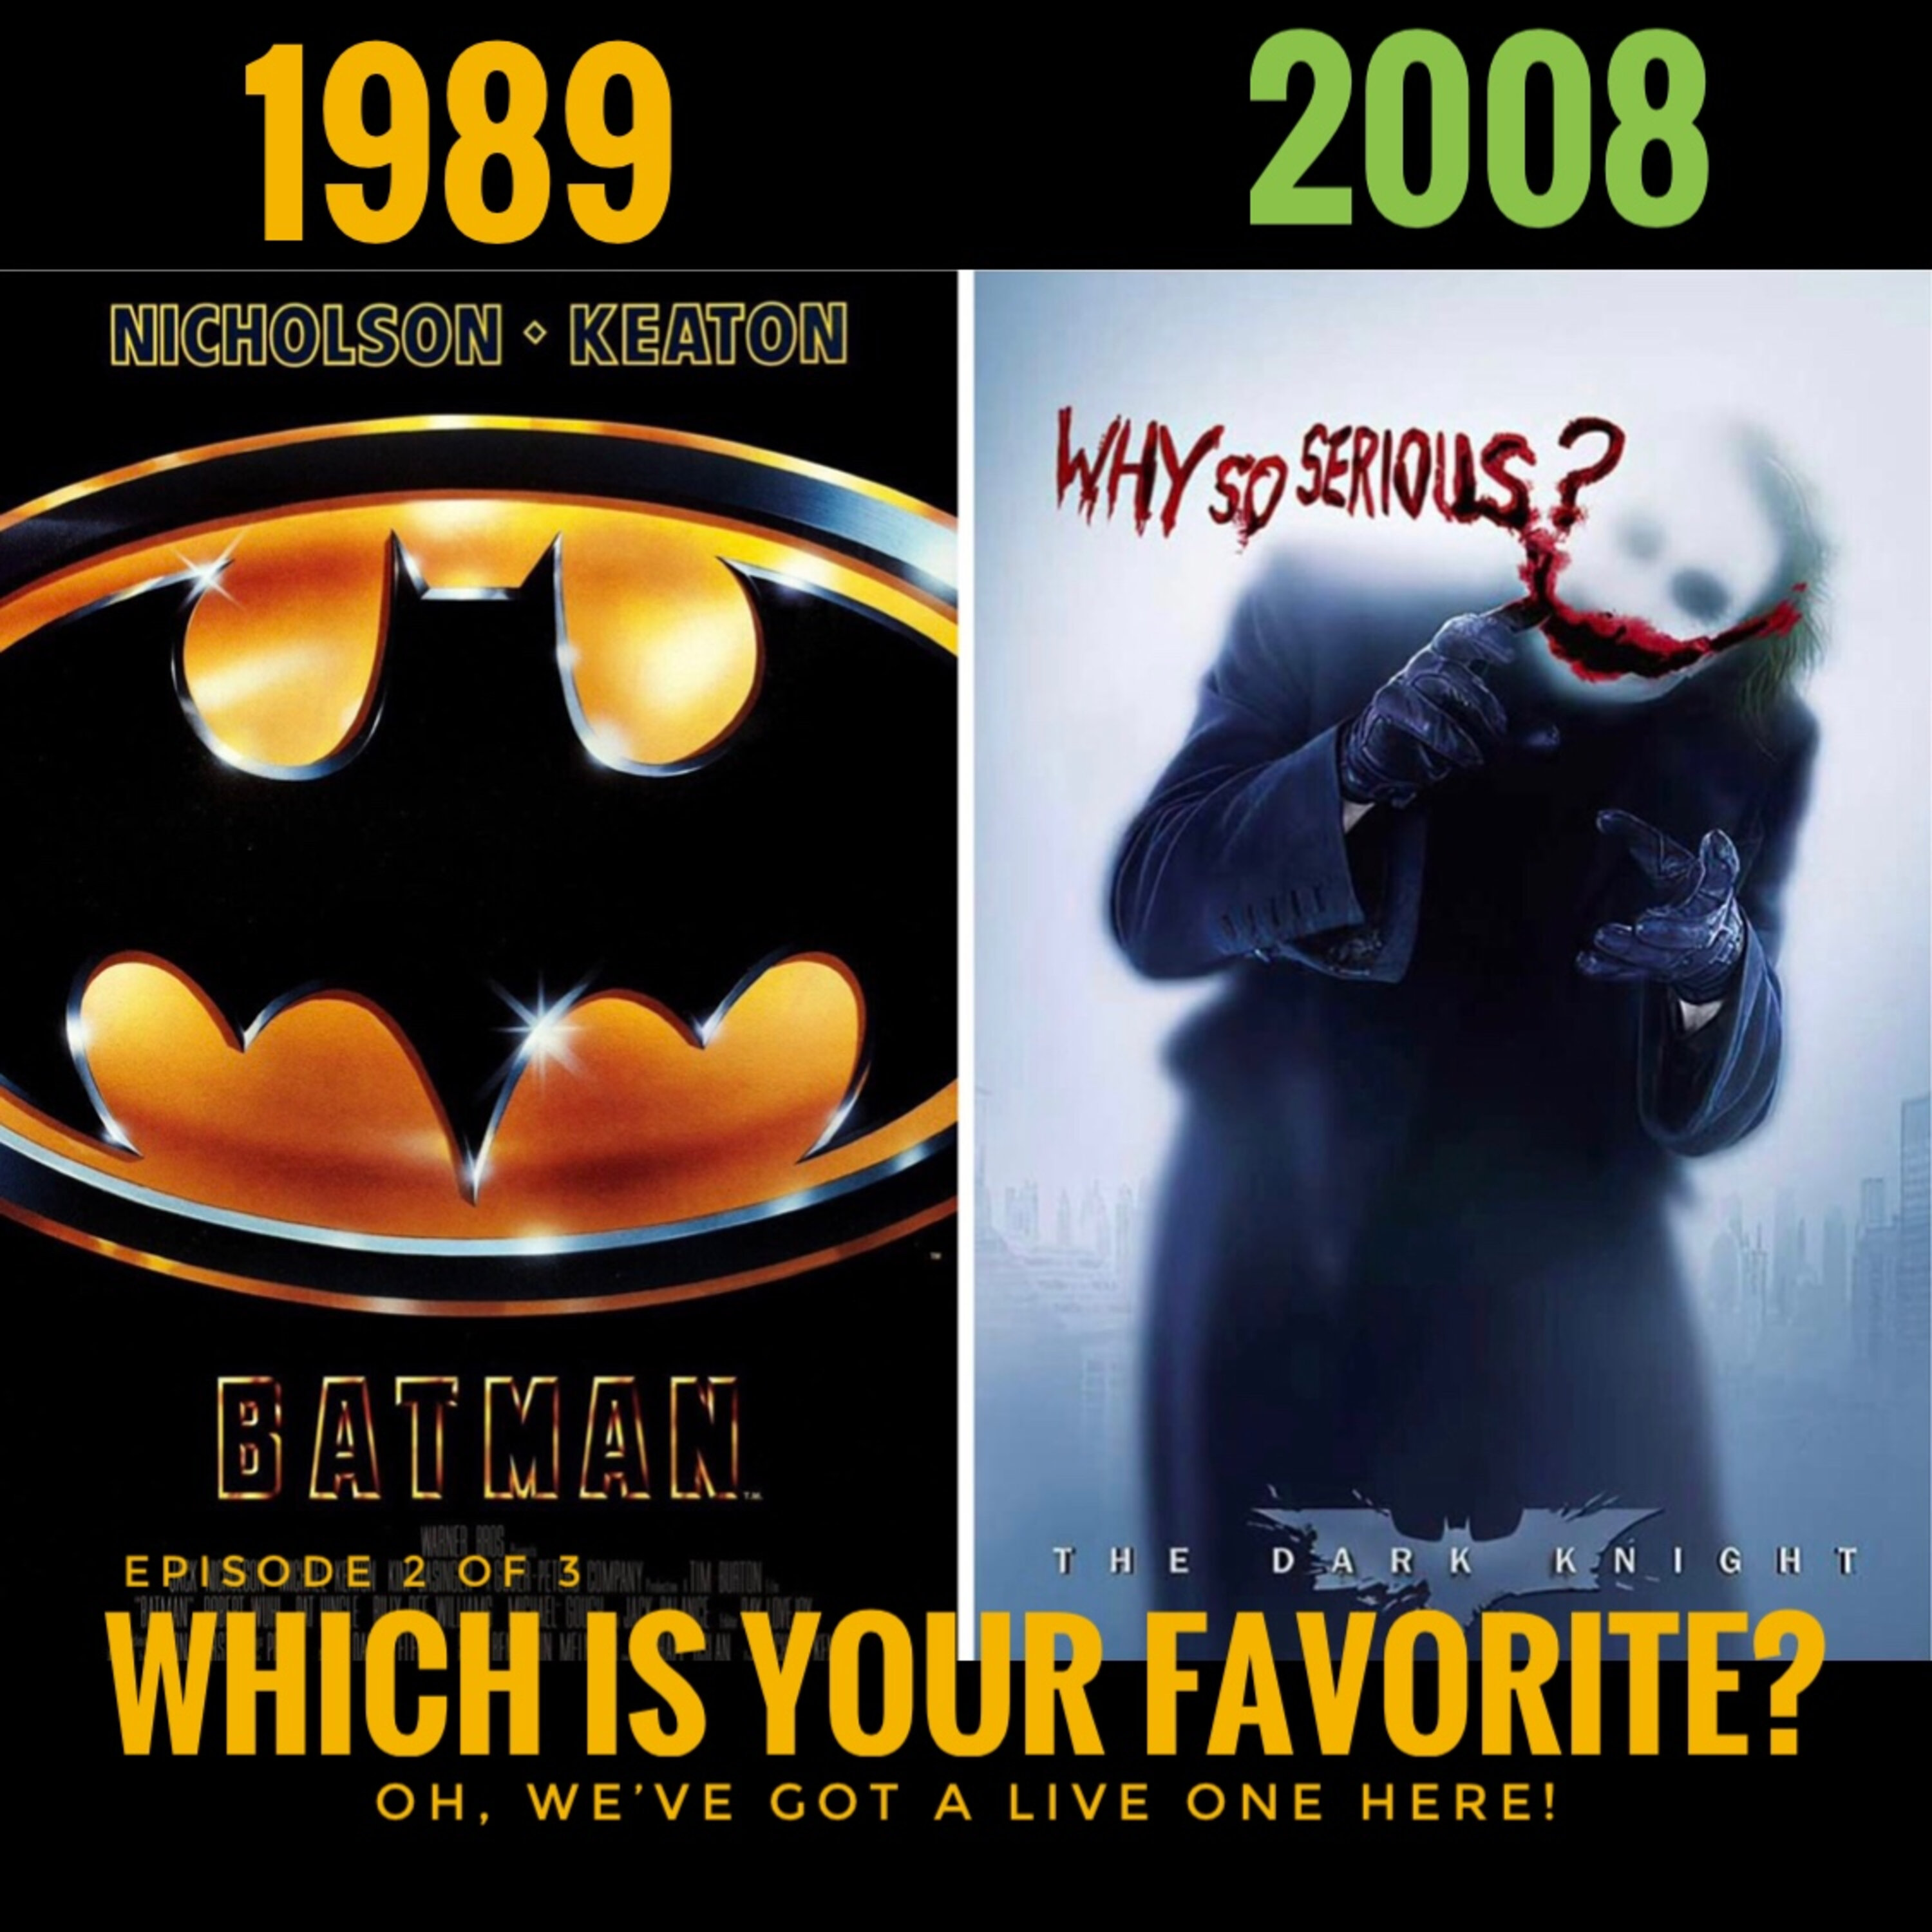 Batman (1989) vs. The Dark Knight (2008): Episode 2 Image